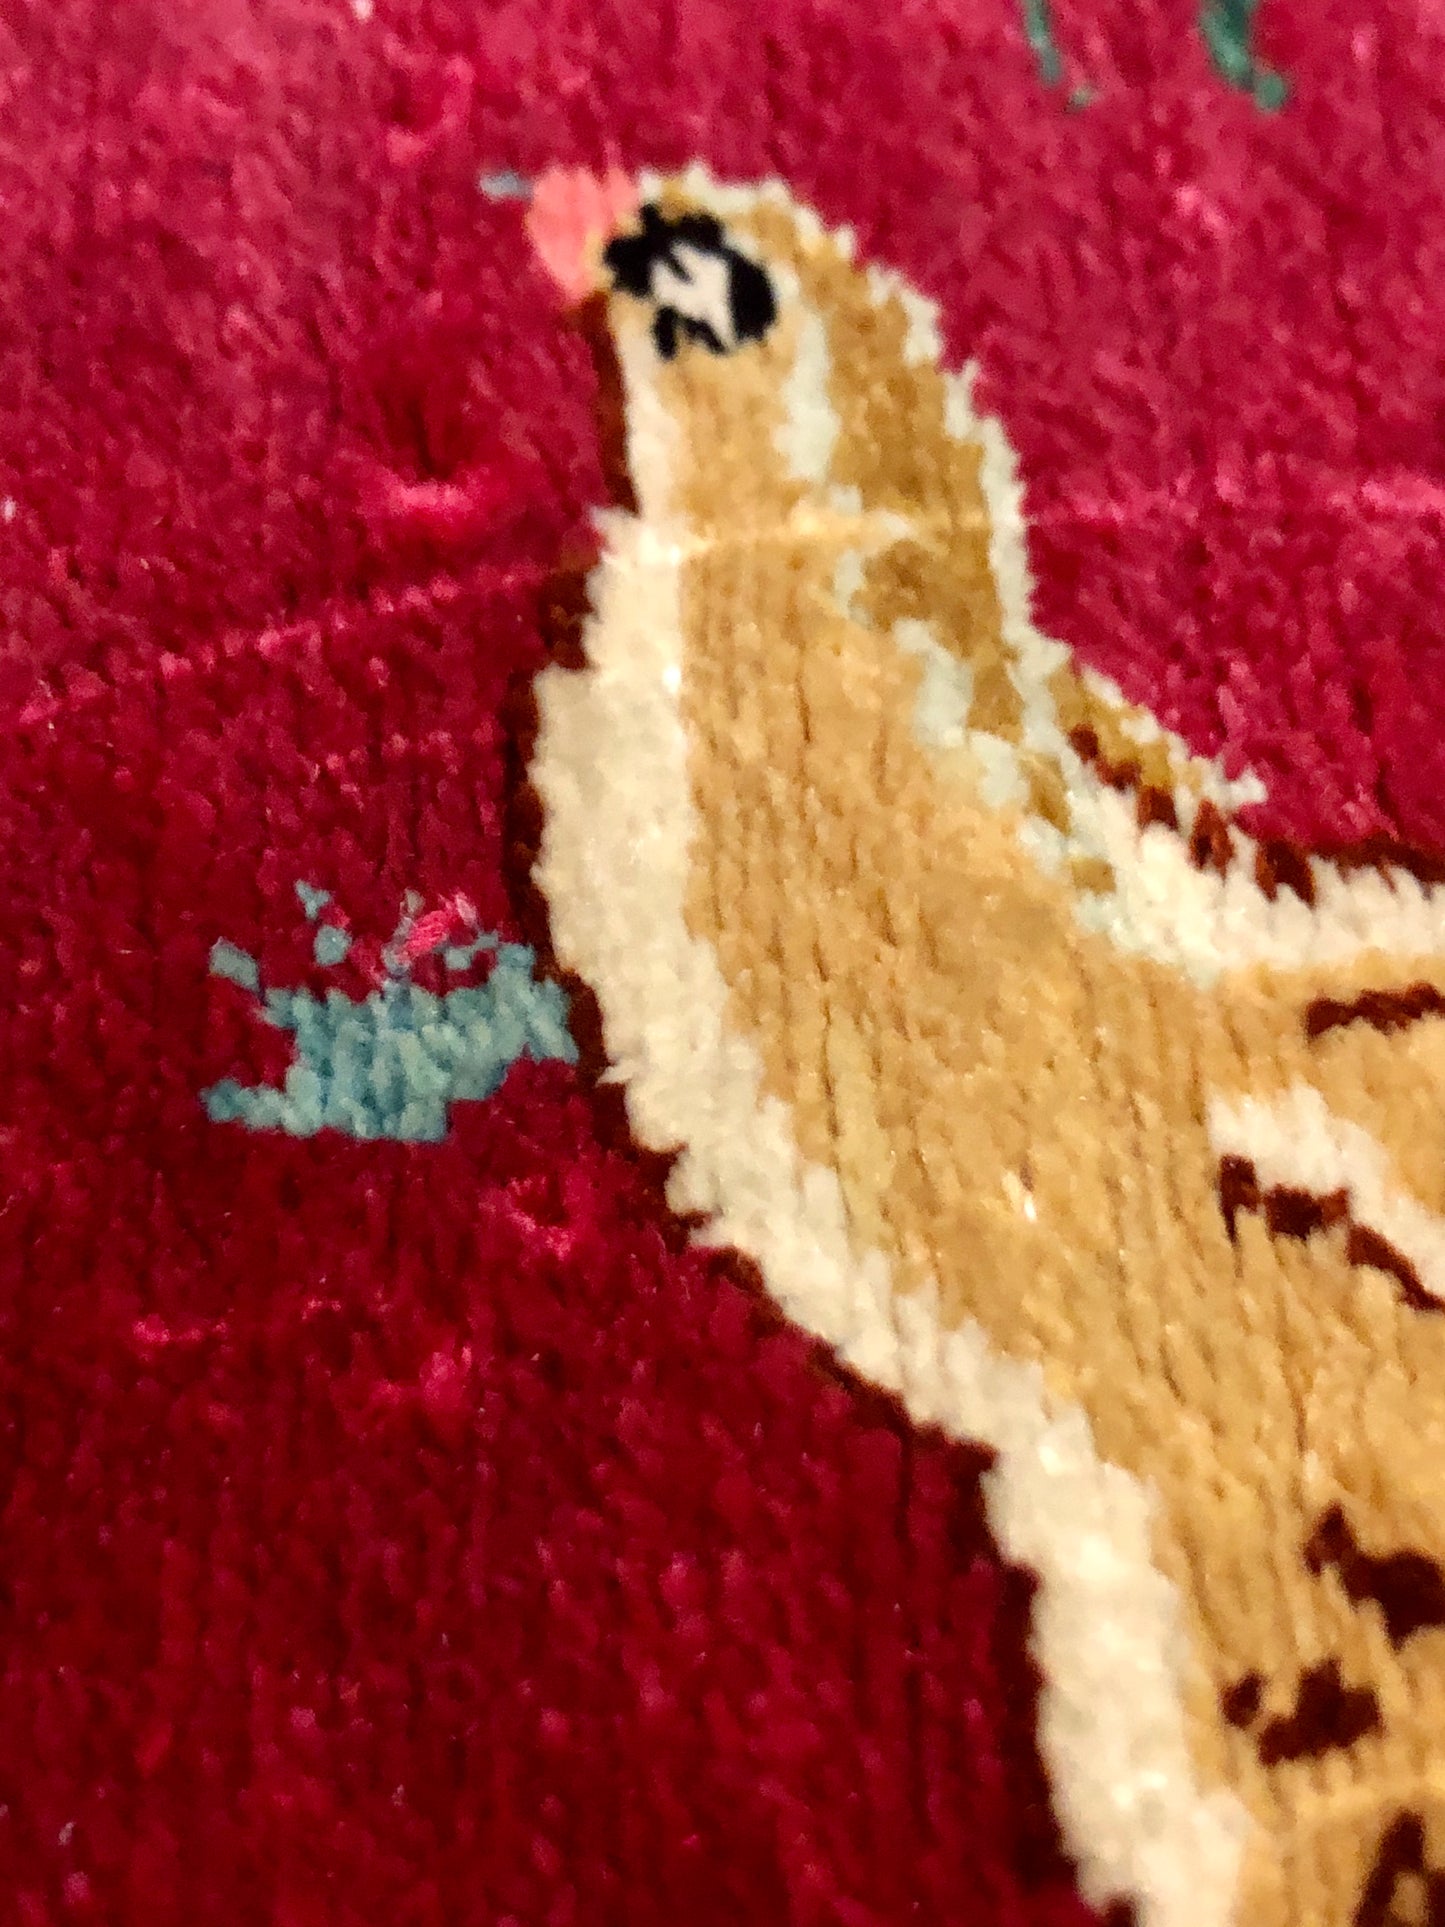 Persian stamped Qom silk on silk Carpet.